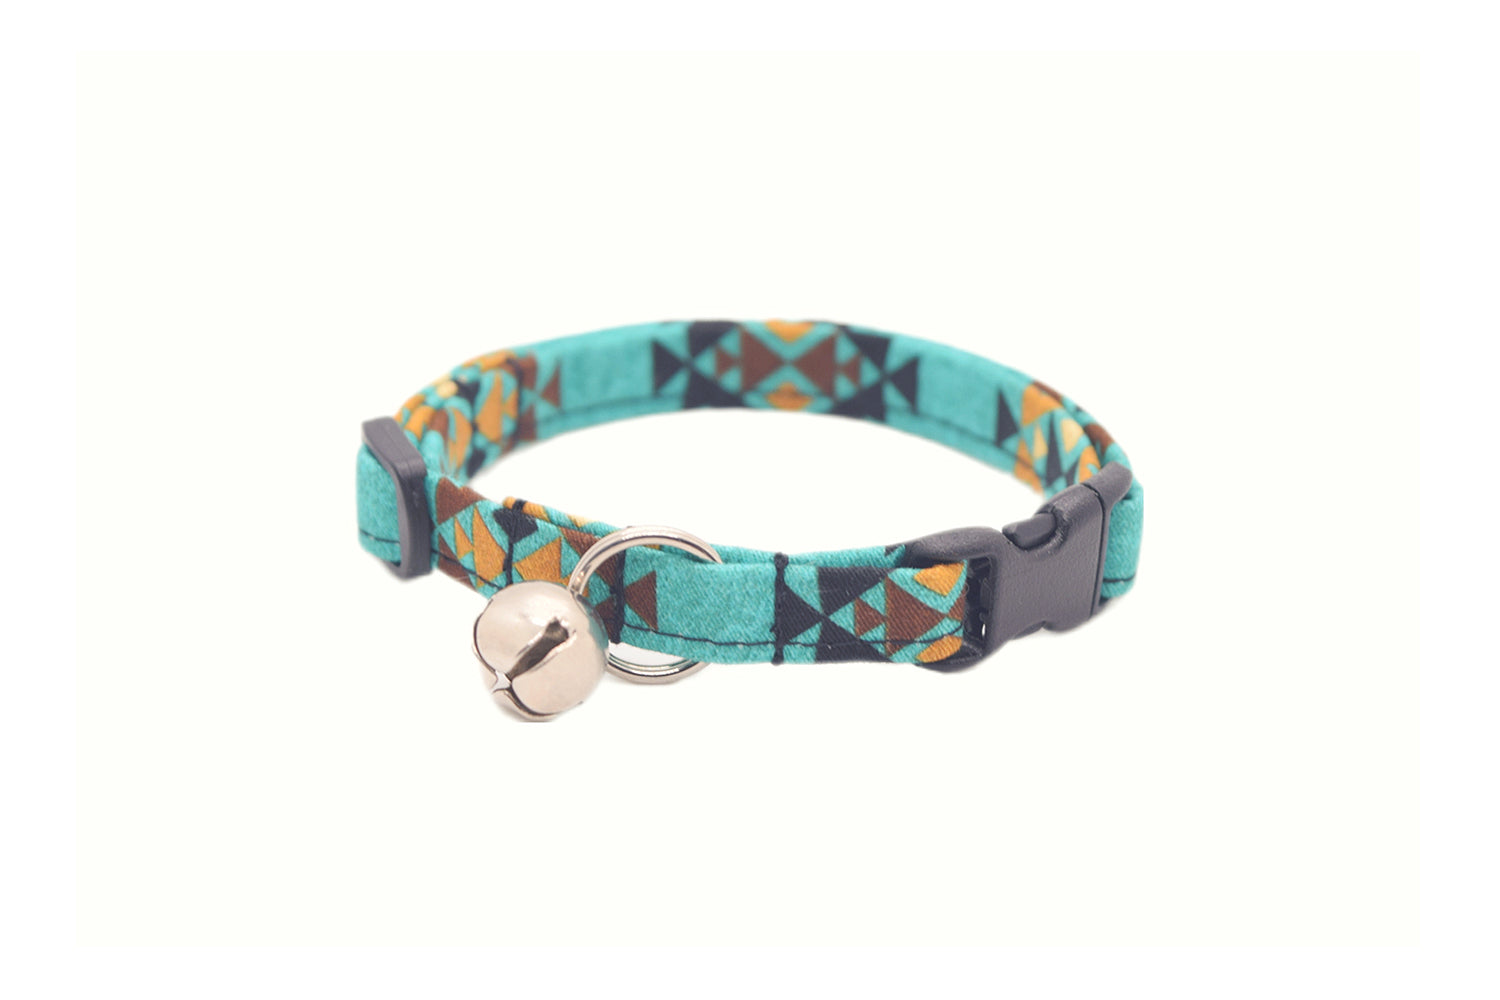 Teal Southwest Tribal Cat Collar - Turquoise Breakaway Cat Collar - Handmade by Kira's Pet Shop